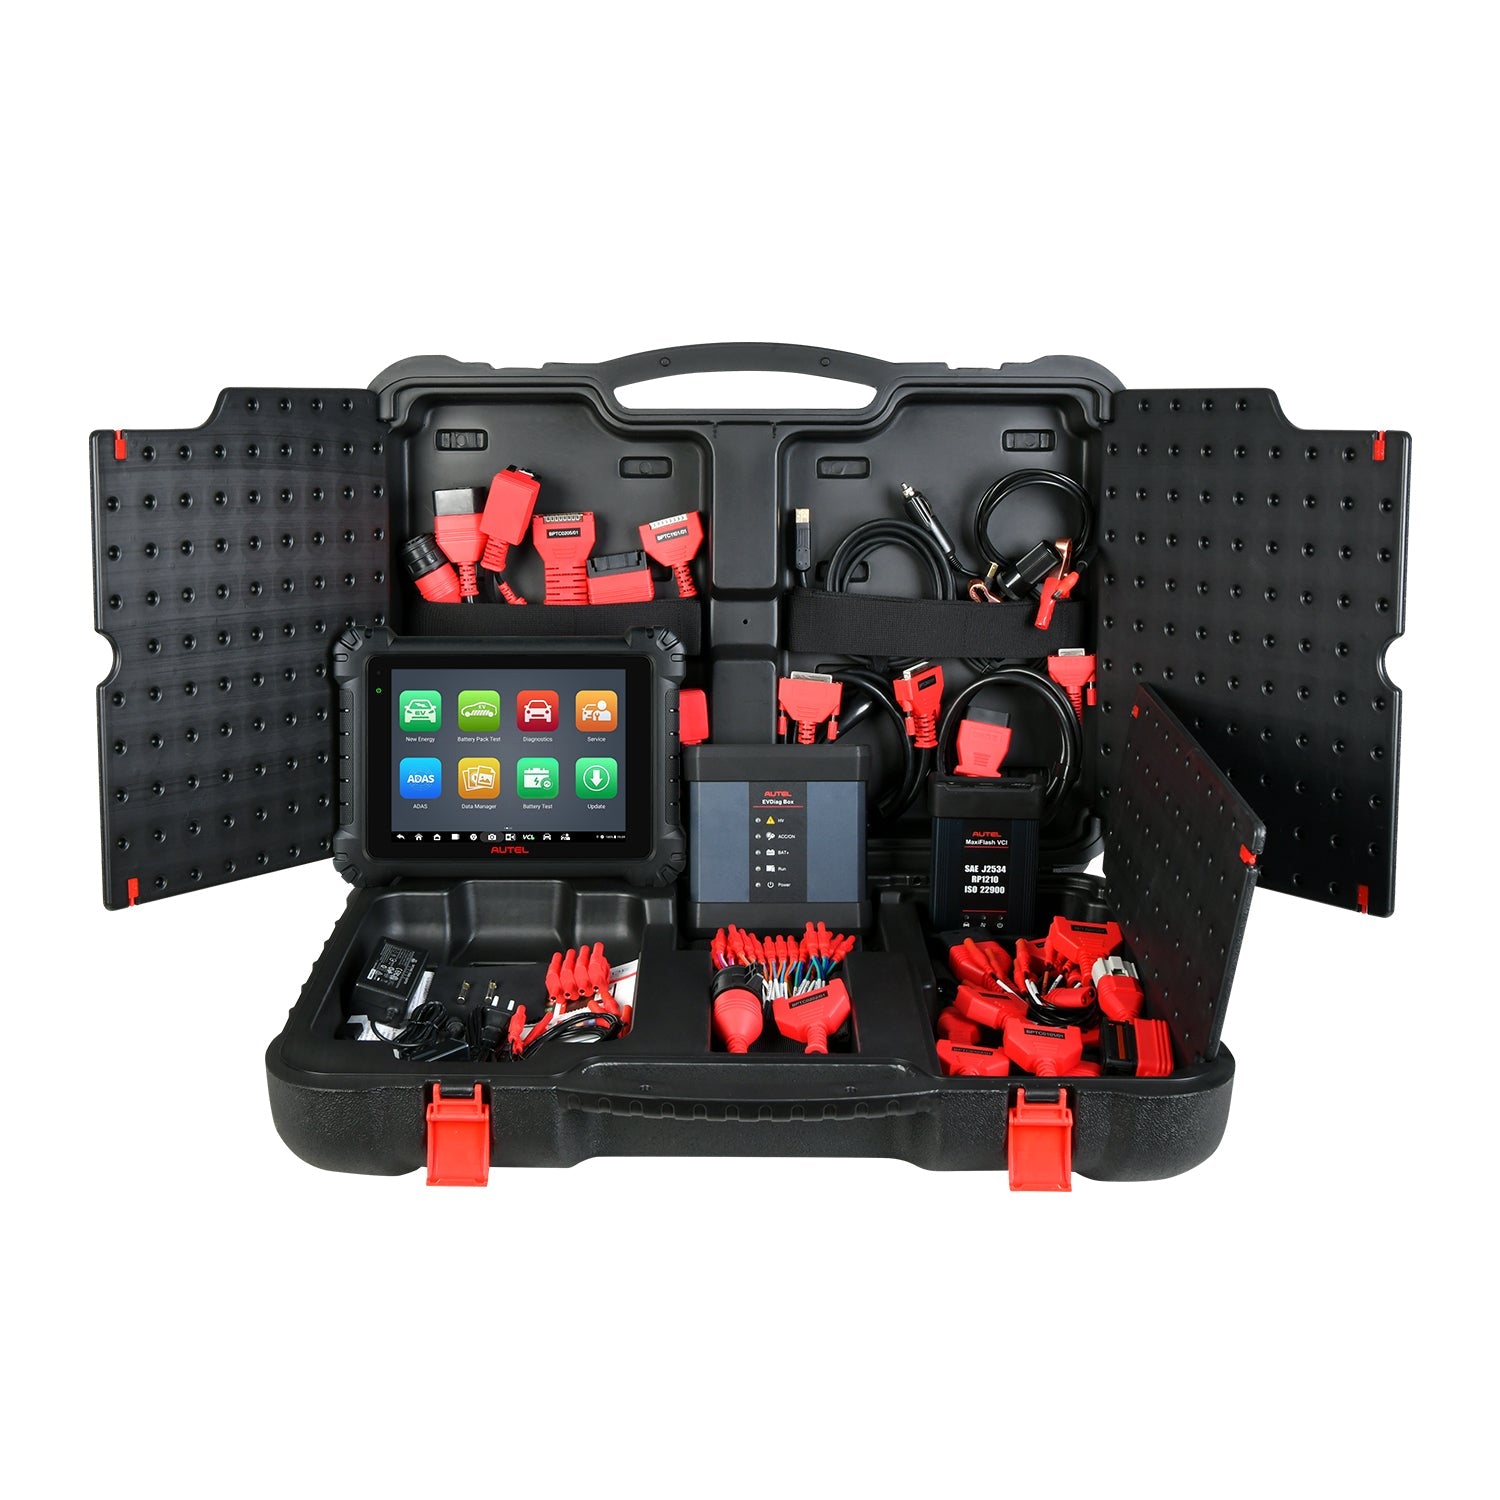 utel Maxisys MS909EV Intelligent EV Diagnostics Scanner Carrying Case Full Kit EV Diag Kit